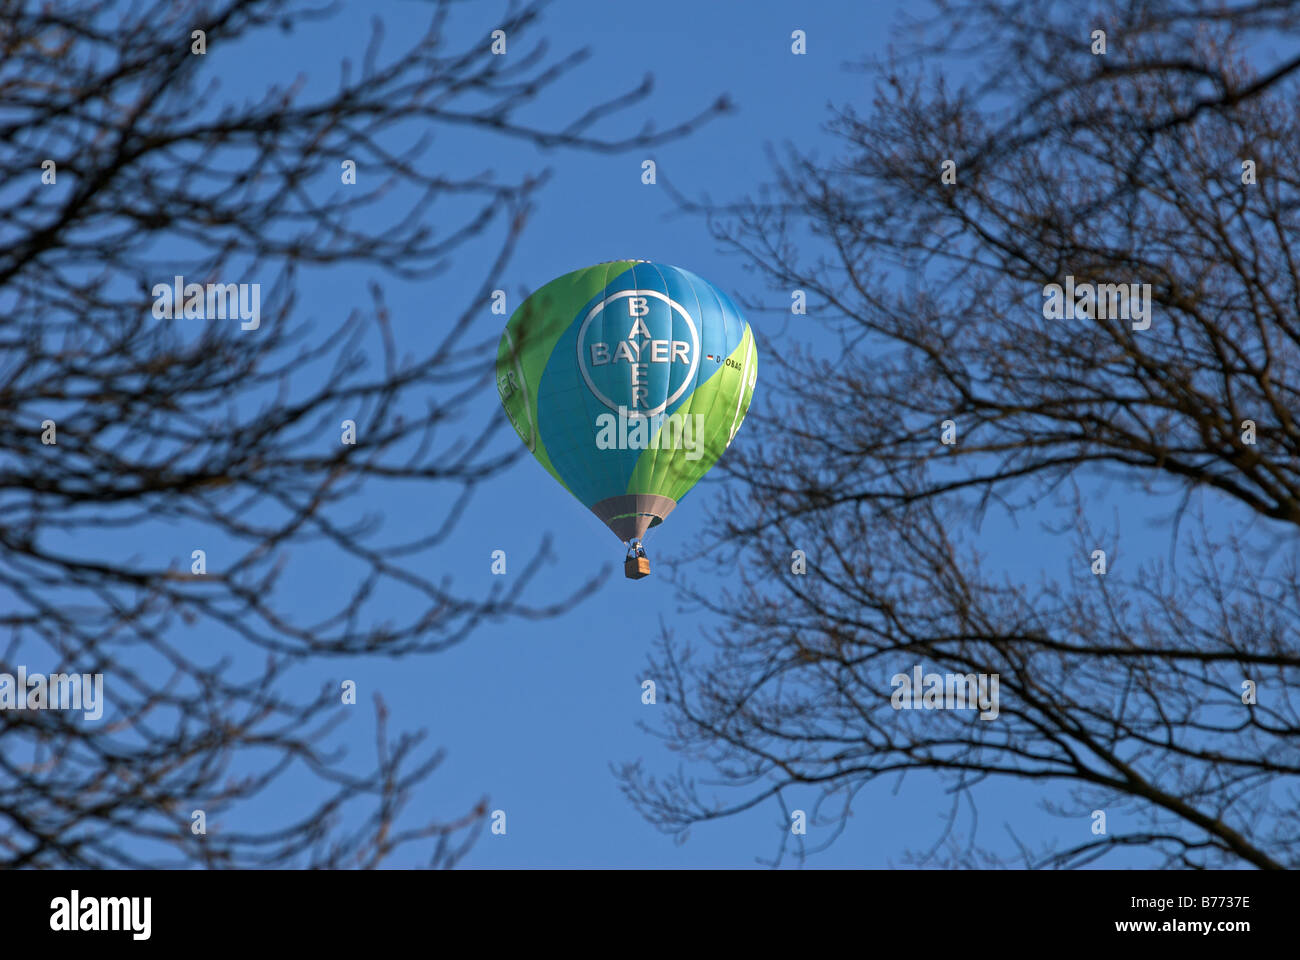 Hot air ballon with the Bayer logo flying over Leverkusen, North Rhine-Westphalia, Germany. Stock Photo